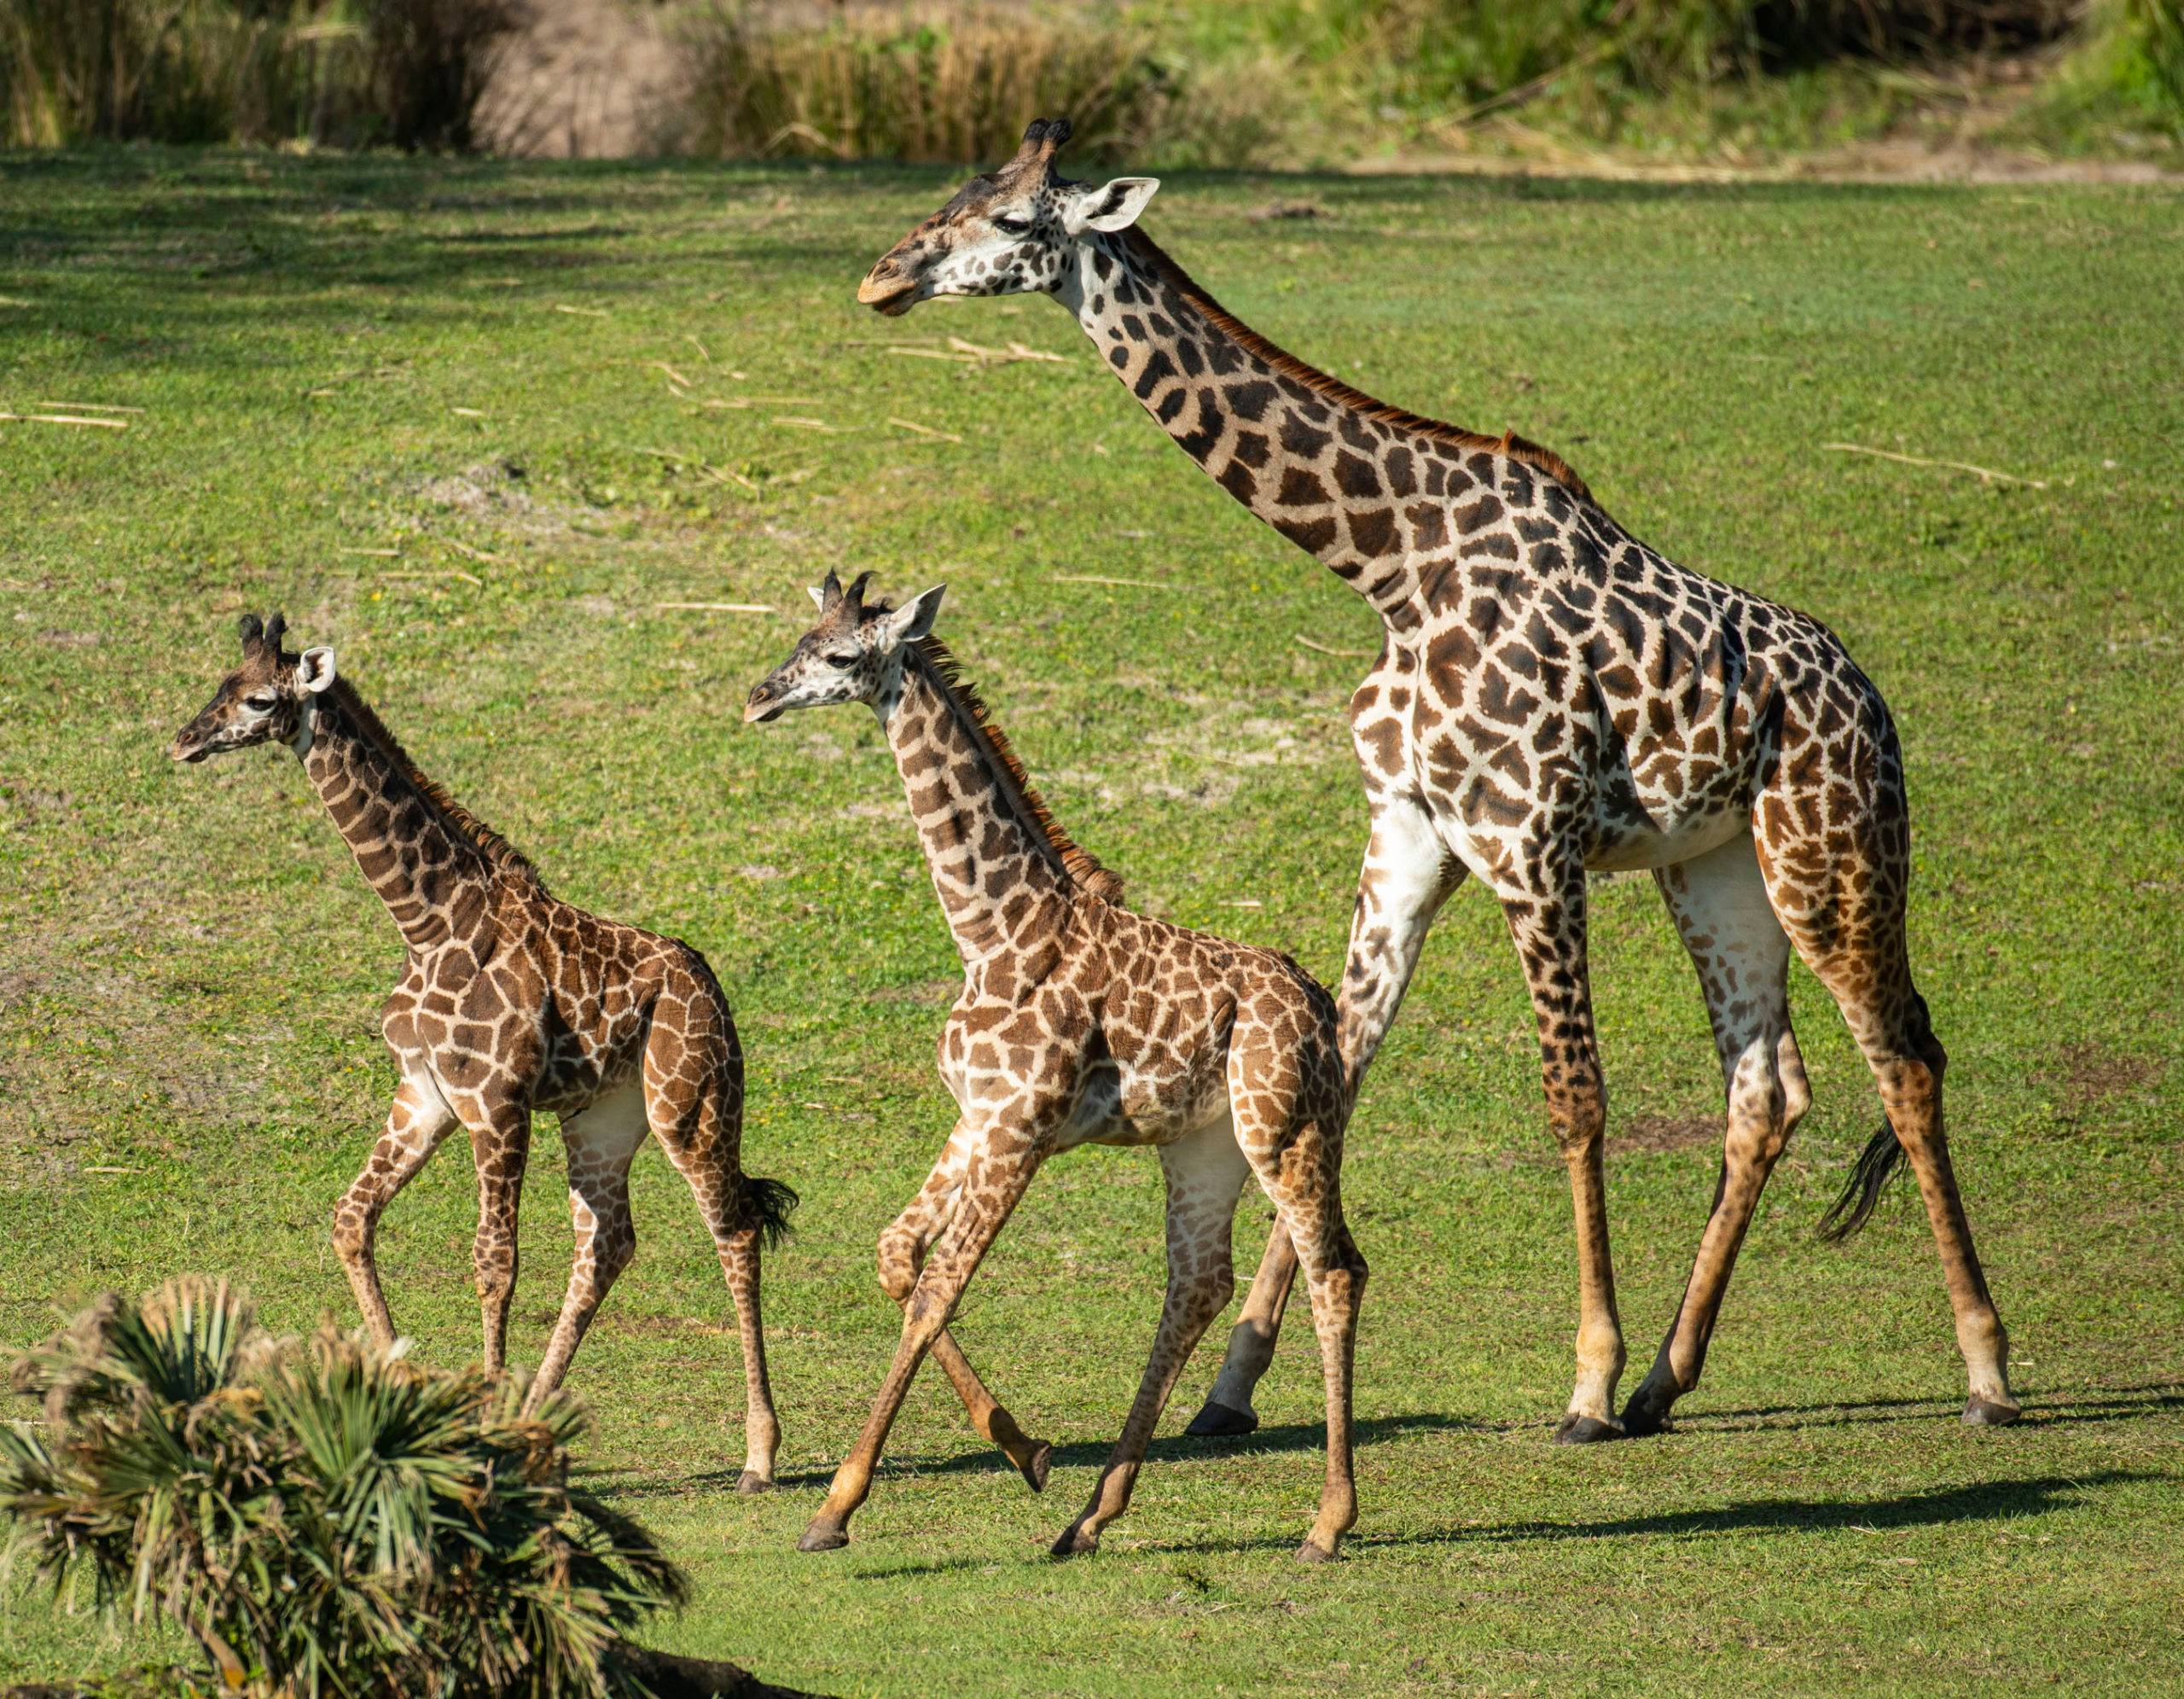 Giraffe Calves join the herd on Kilimanjaro Safaris - December 2020